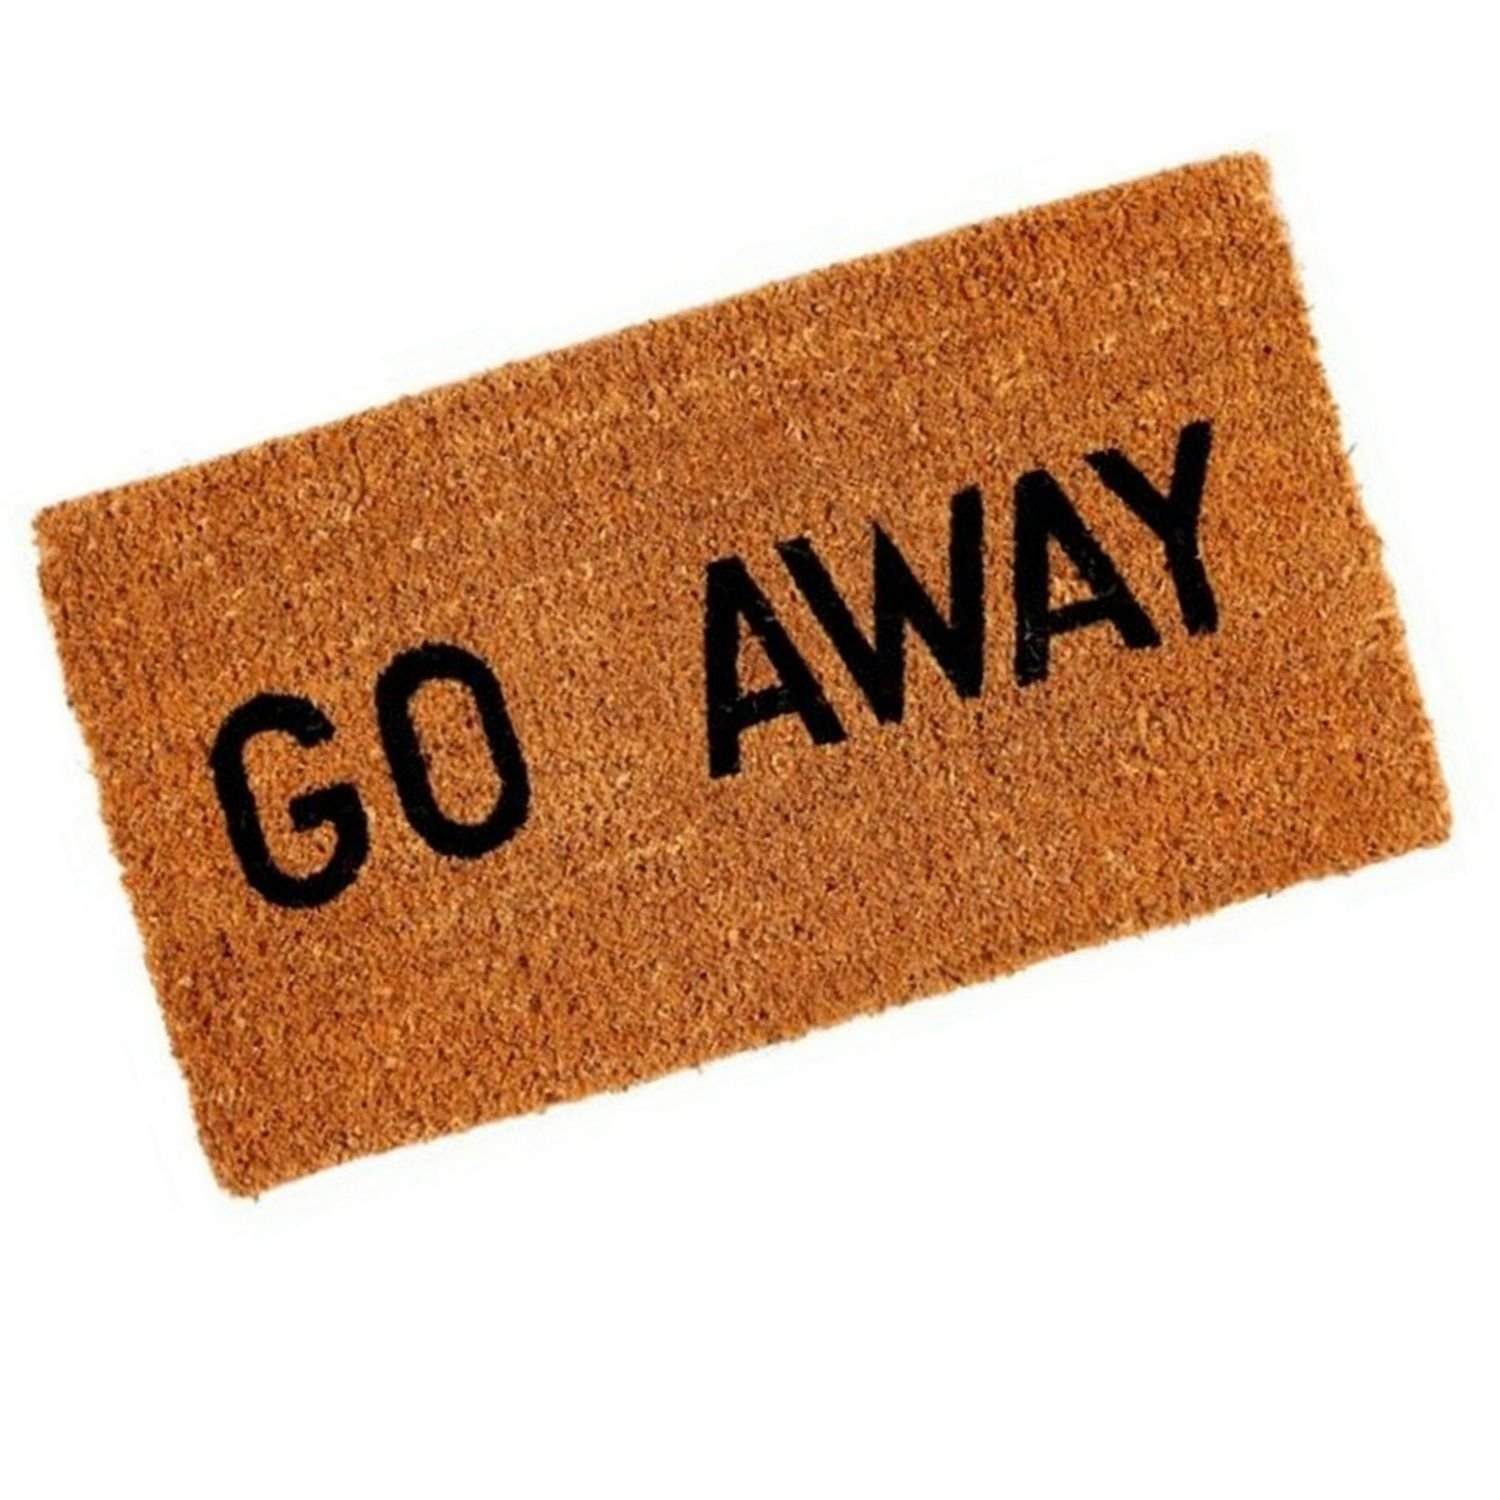 Make go away. Go away картинка. Go away картинка для детей. Go away Doormat. Надпись go away.